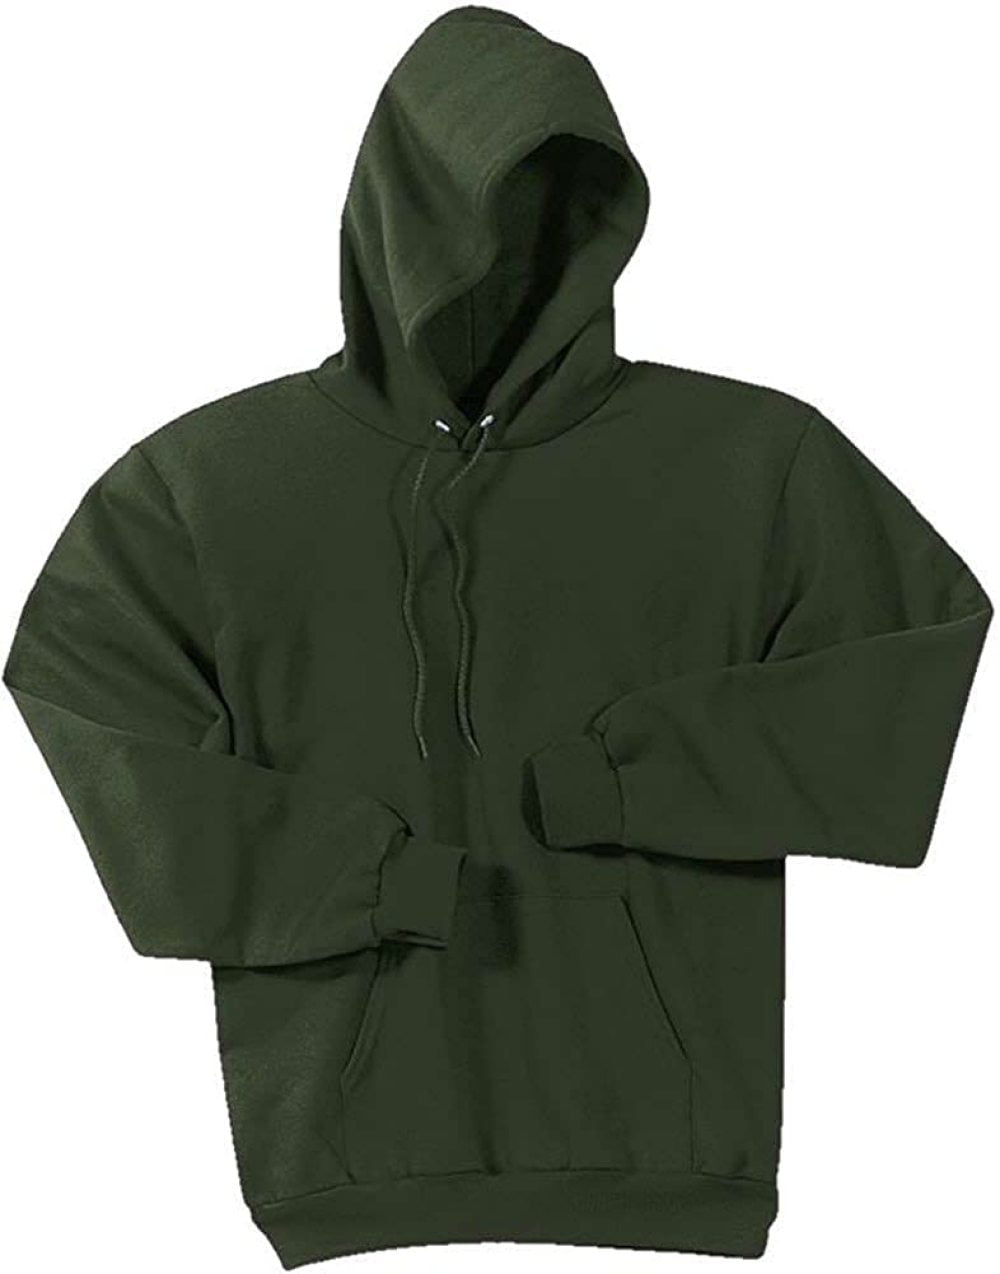 Joe's USA Hoodies Soft & Cozy Hooded Sweatshirt,Small Neon Green